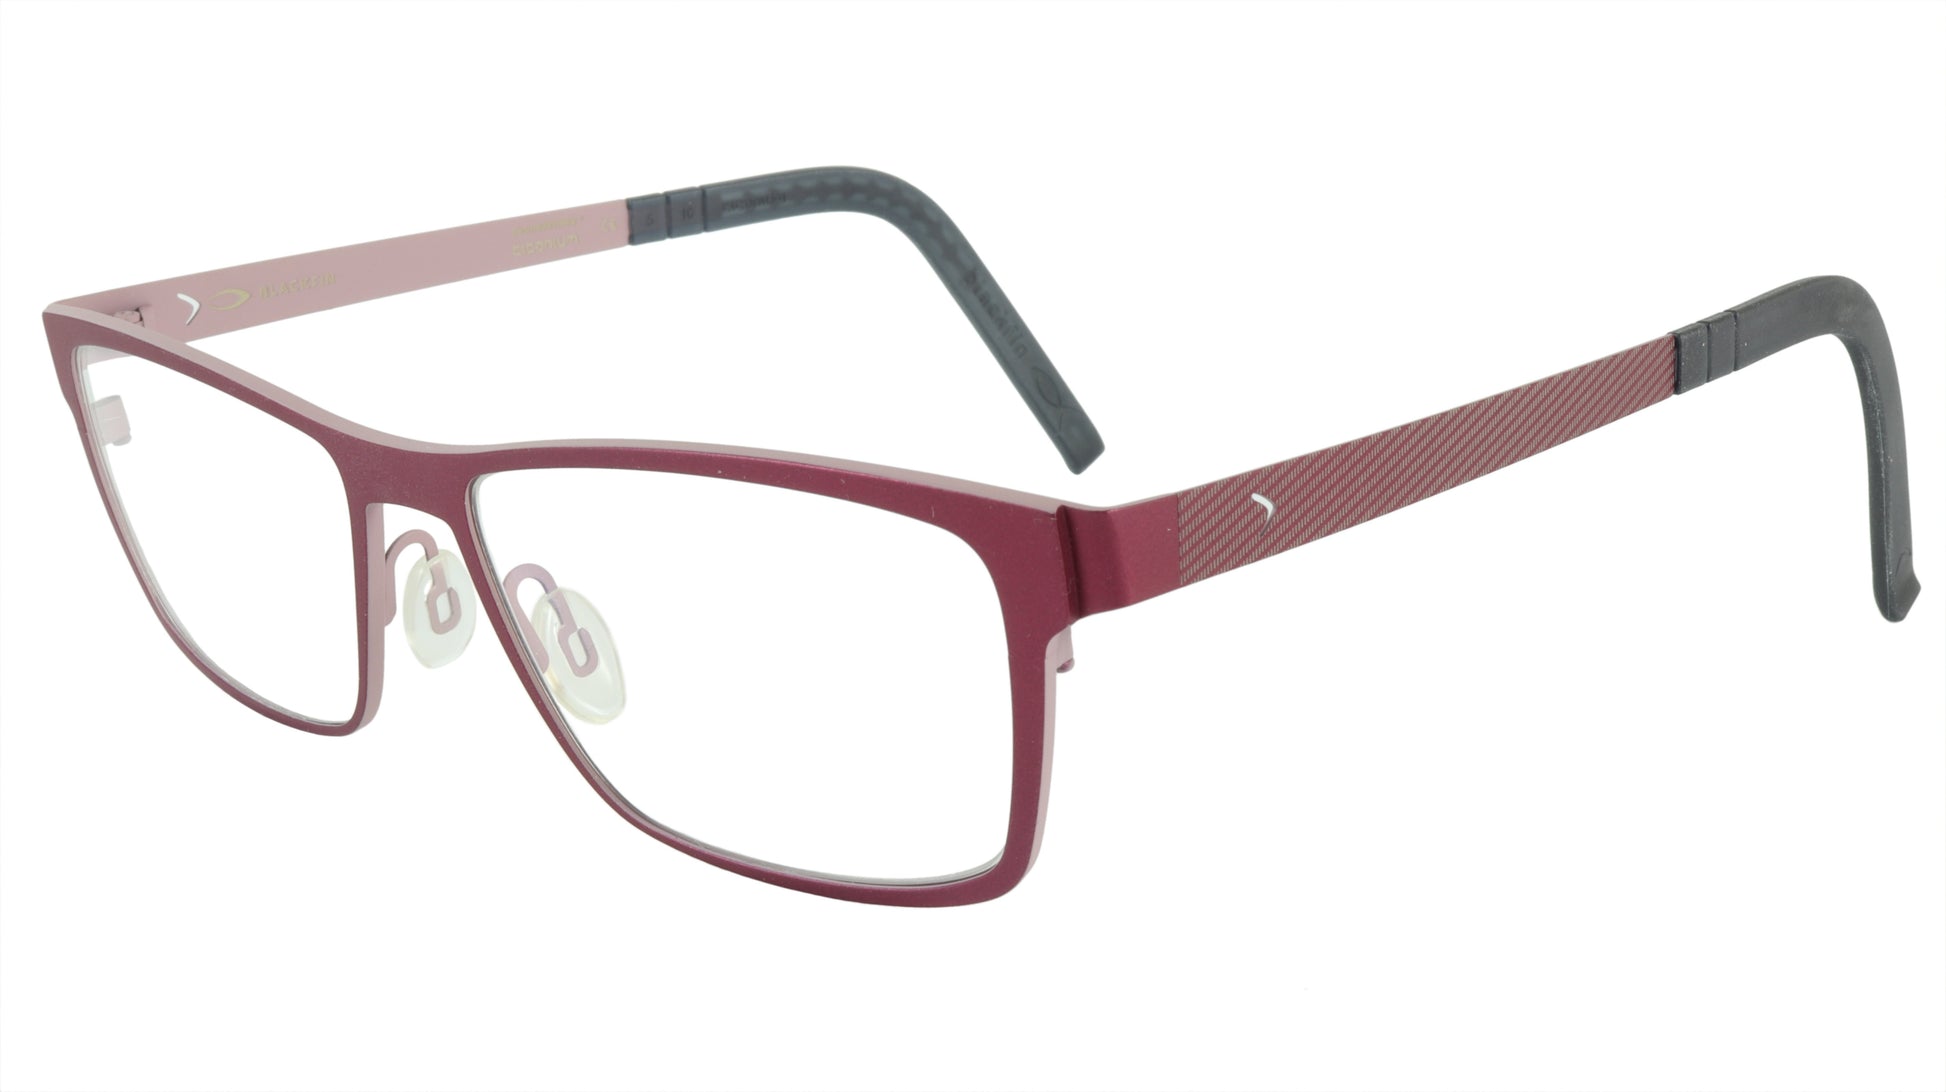 Blackfin Enderby BF772 C610 Beta-Titanium Bio-compatible Italy Made Eyeglasses - Frame Bay